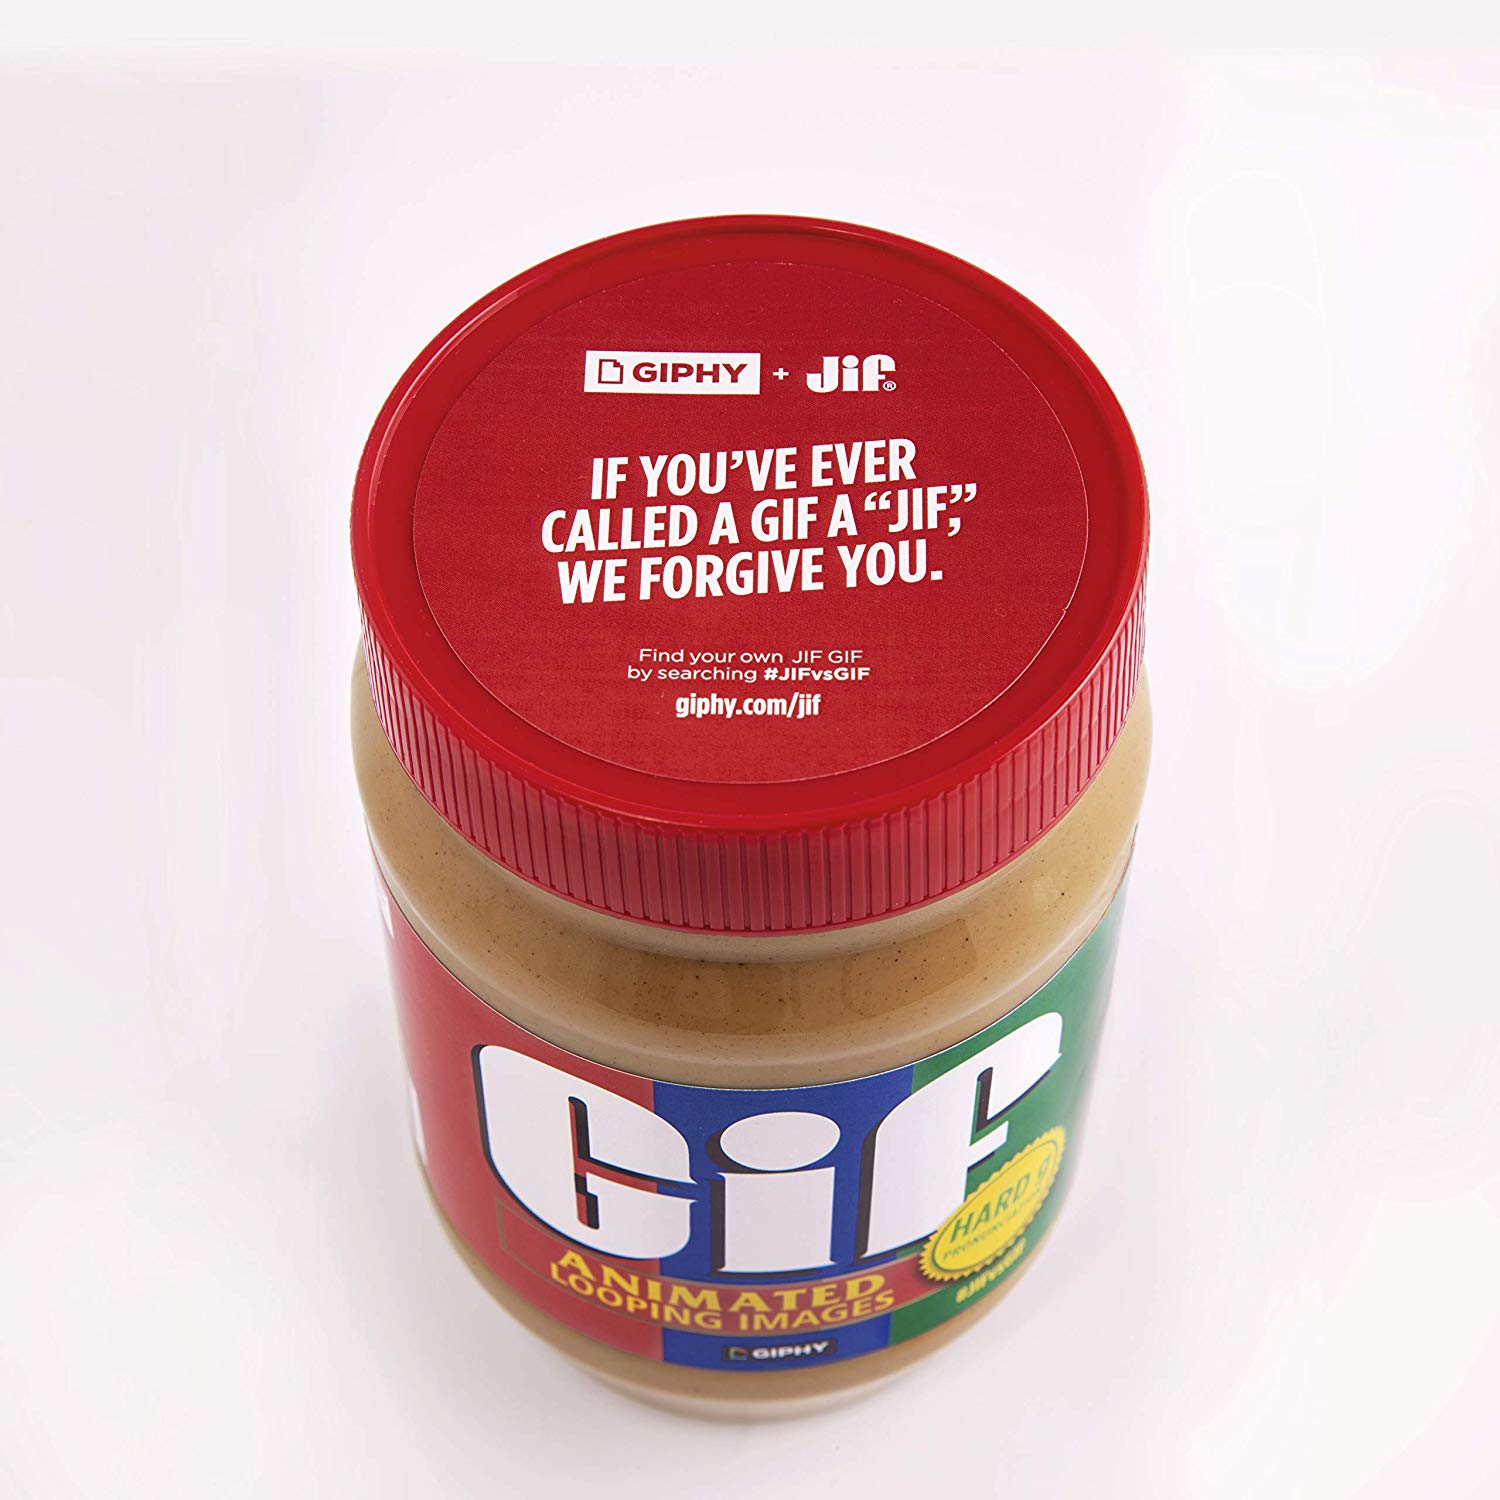 jif giphy gif peanut butter jar lid 